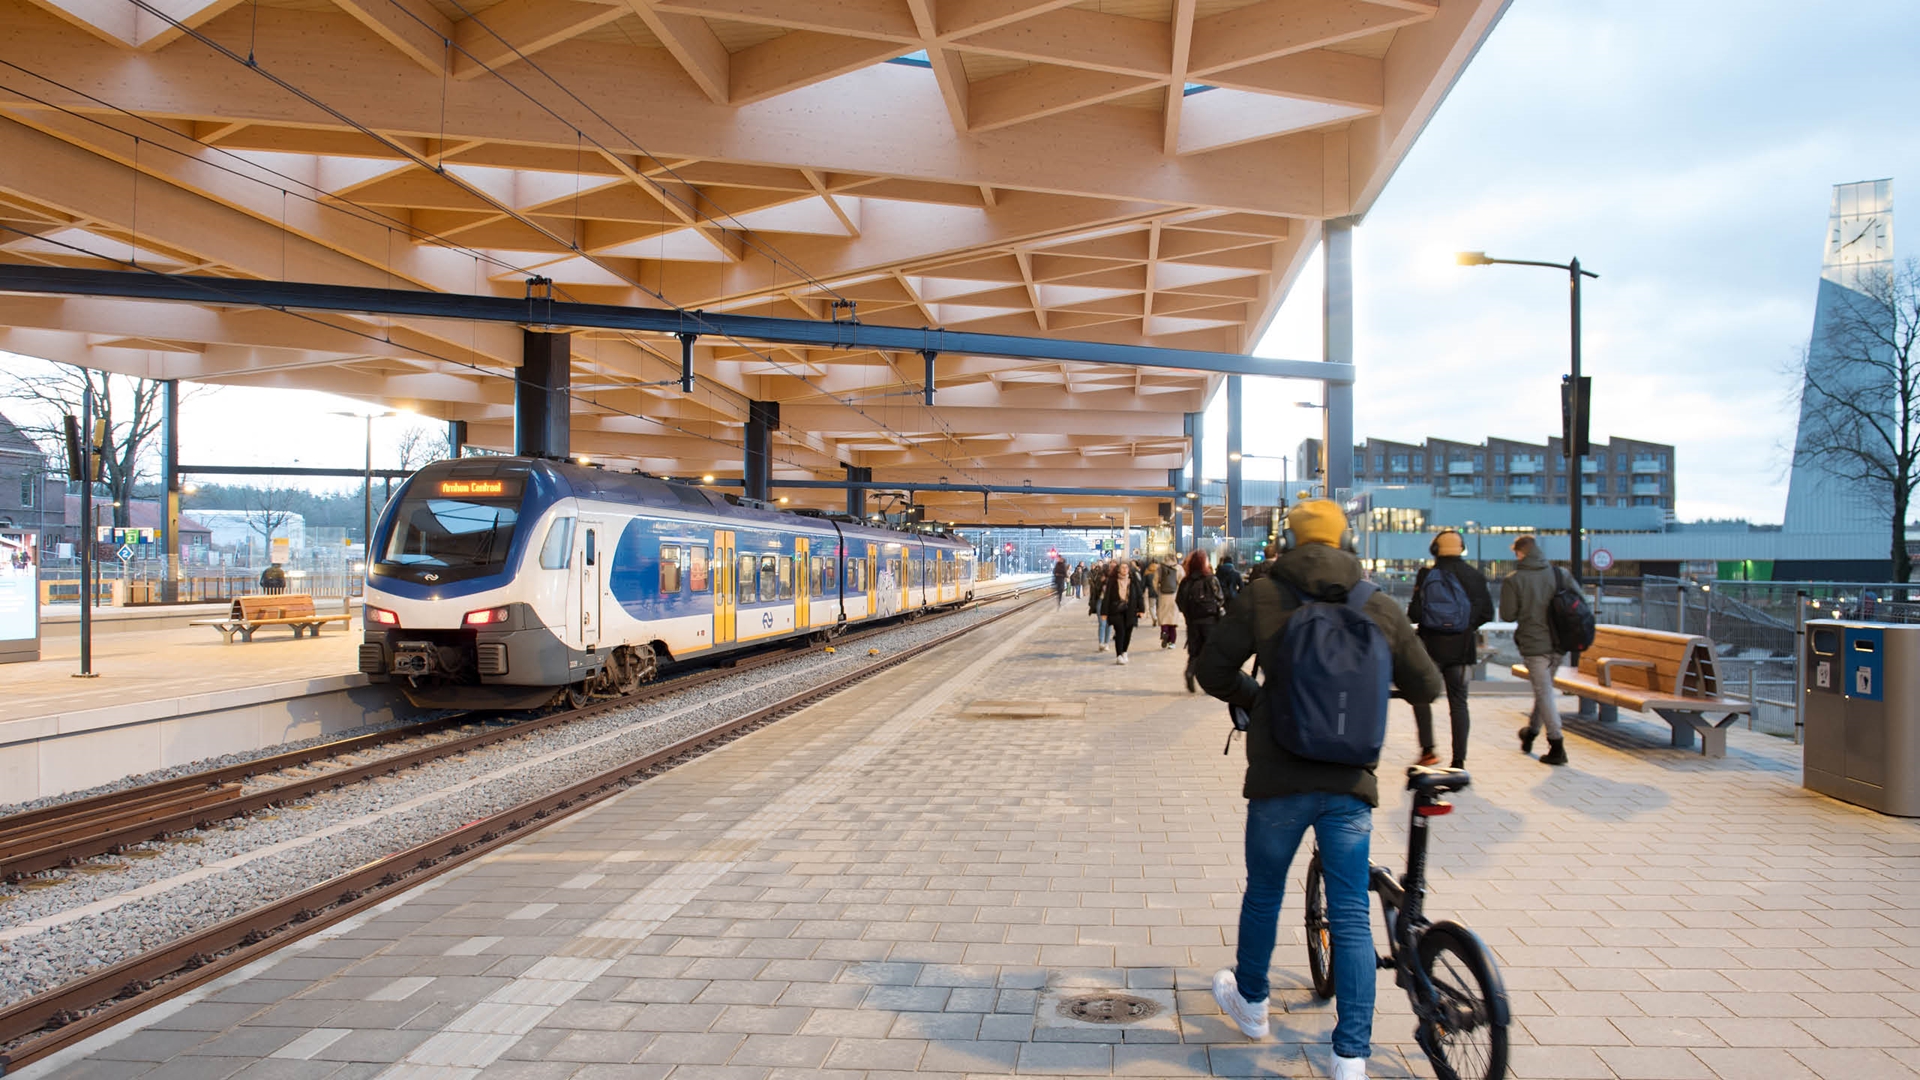 Station Ede-Wageningen overdag reizigers die overstappen/instappen in trein NS